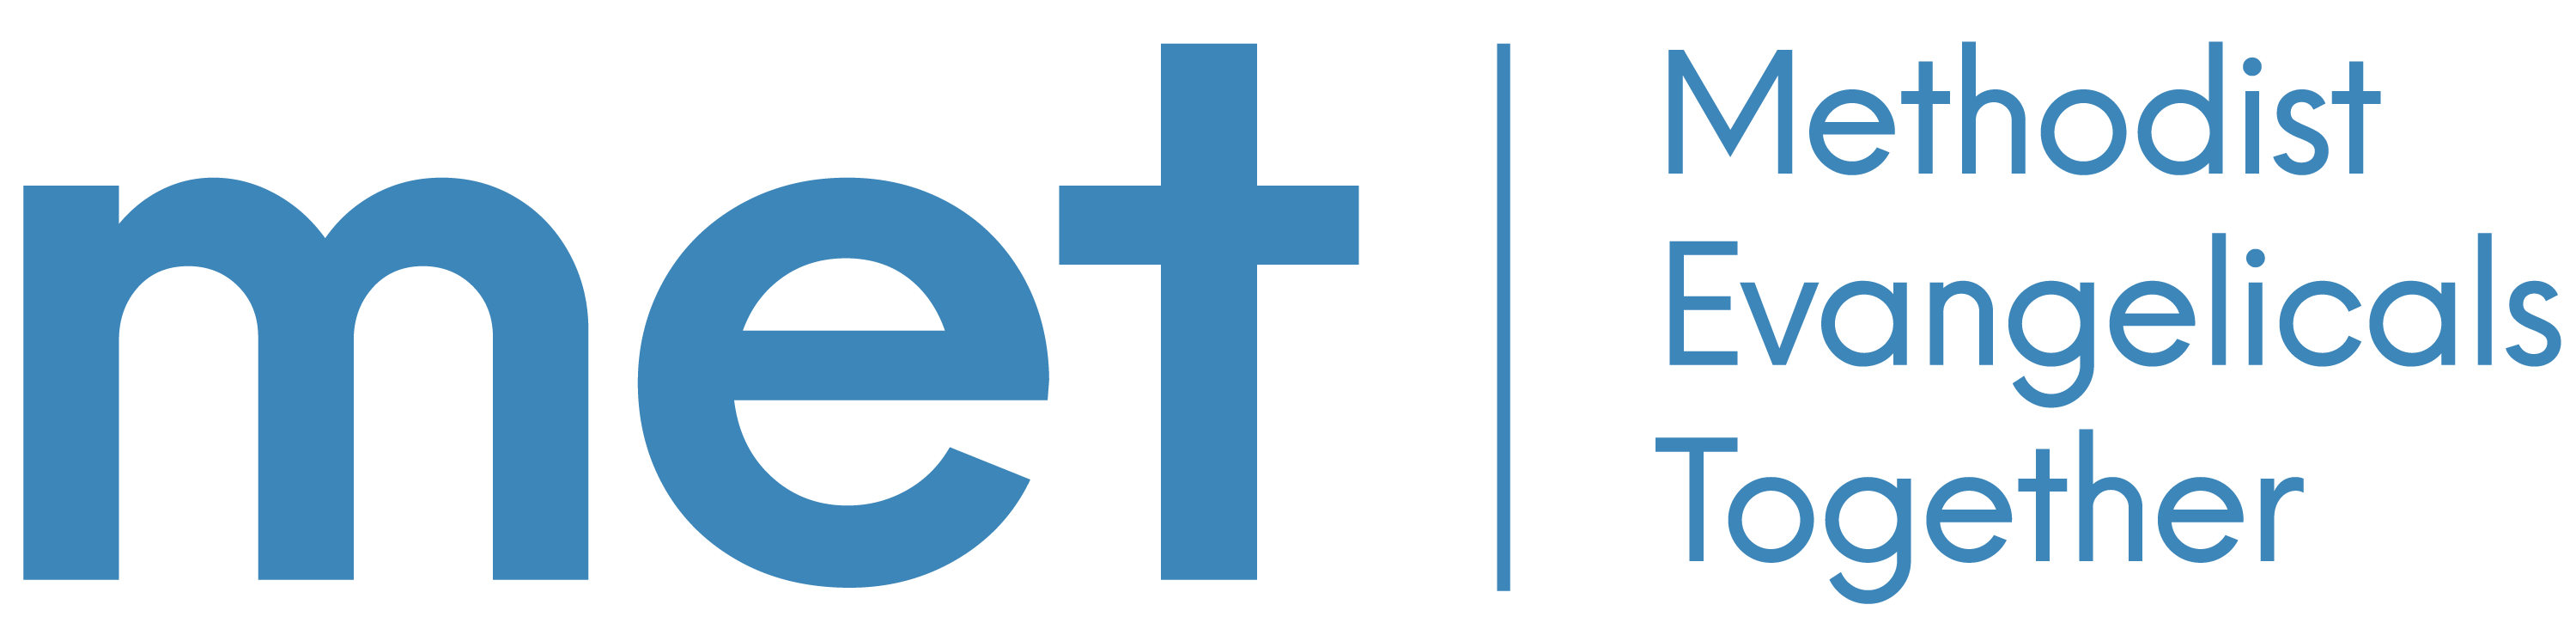 MET logo high resolution